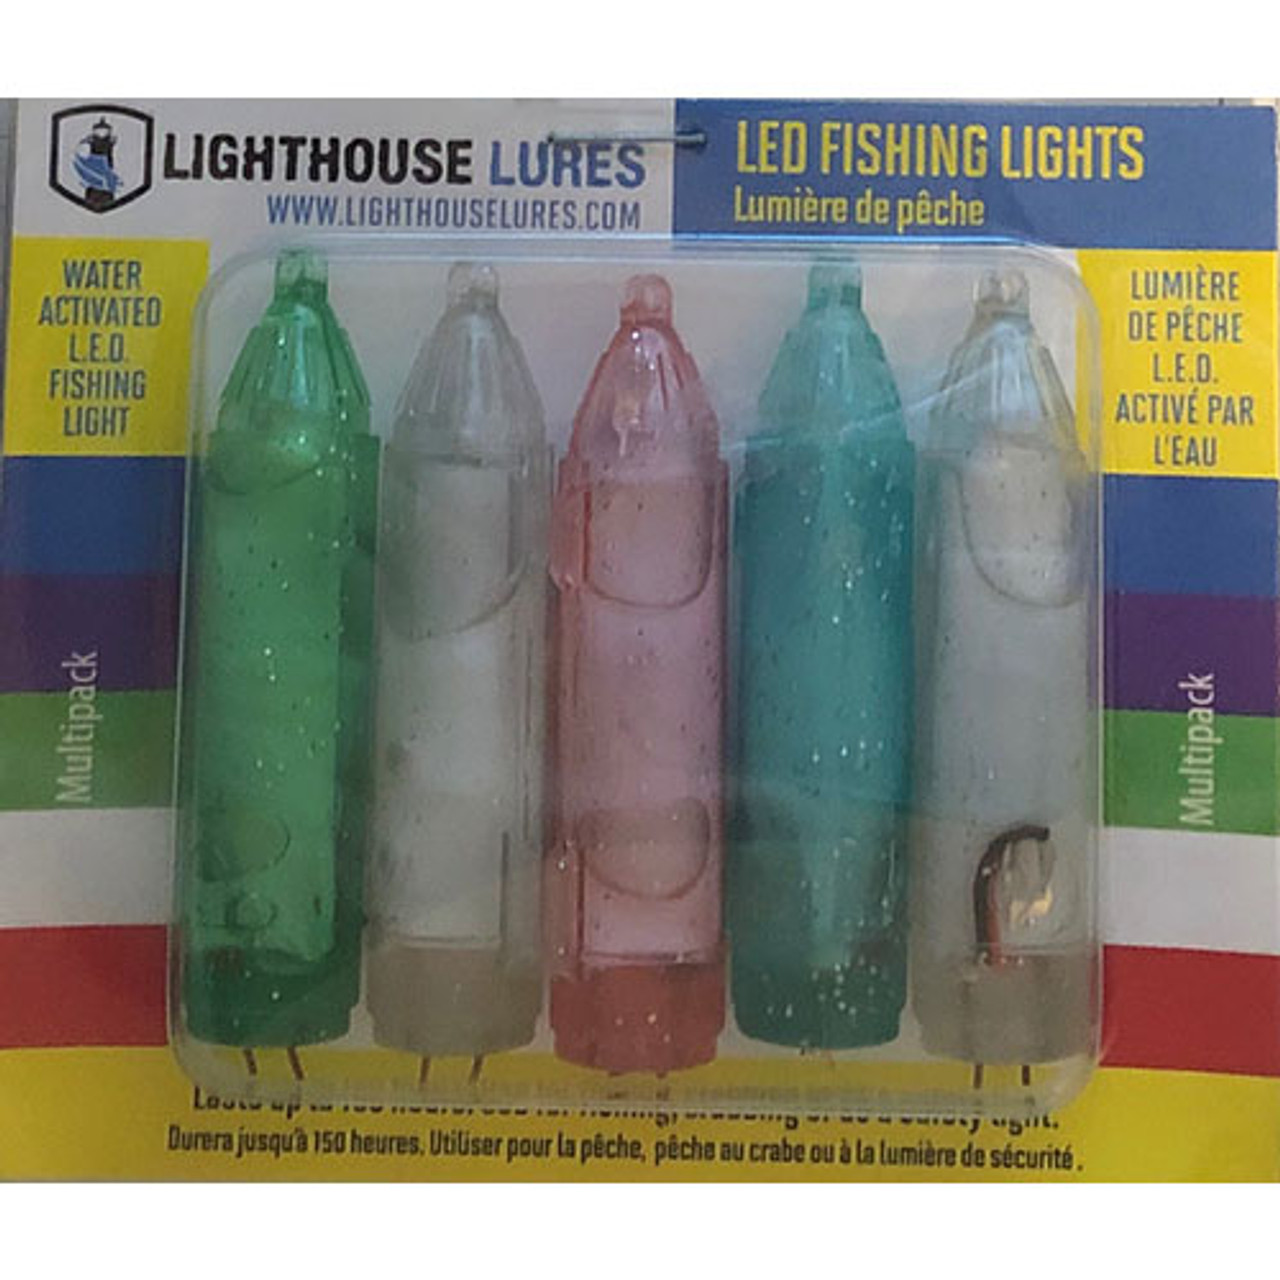 Led Fish Lure Light Hook Low Power Consumption LED Deep Sea